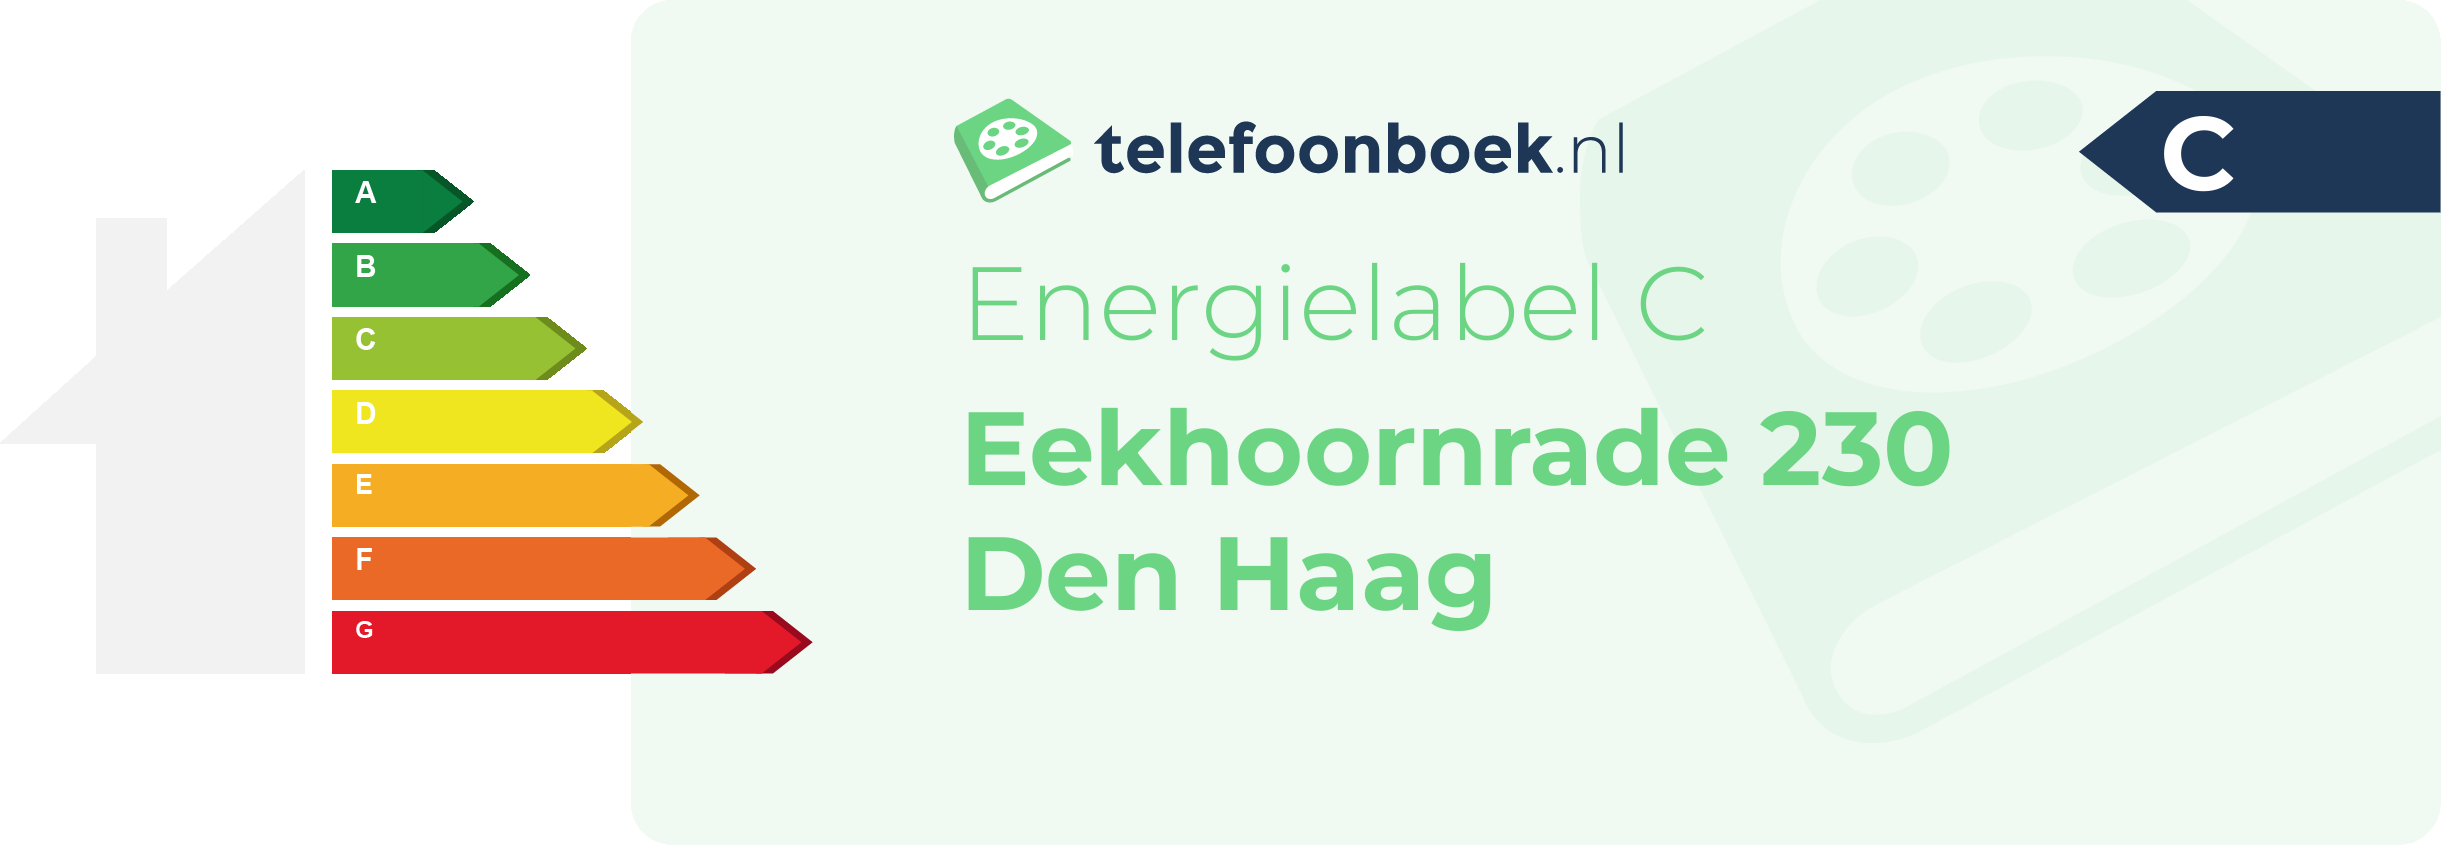 Energielabel Eekhoornrade 230 Den Haag